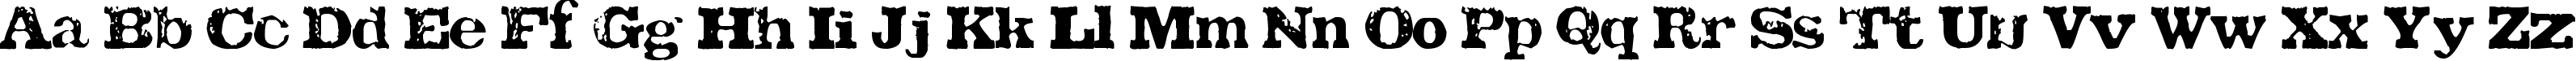 Пример написания английского алфавита шрифтом TATU